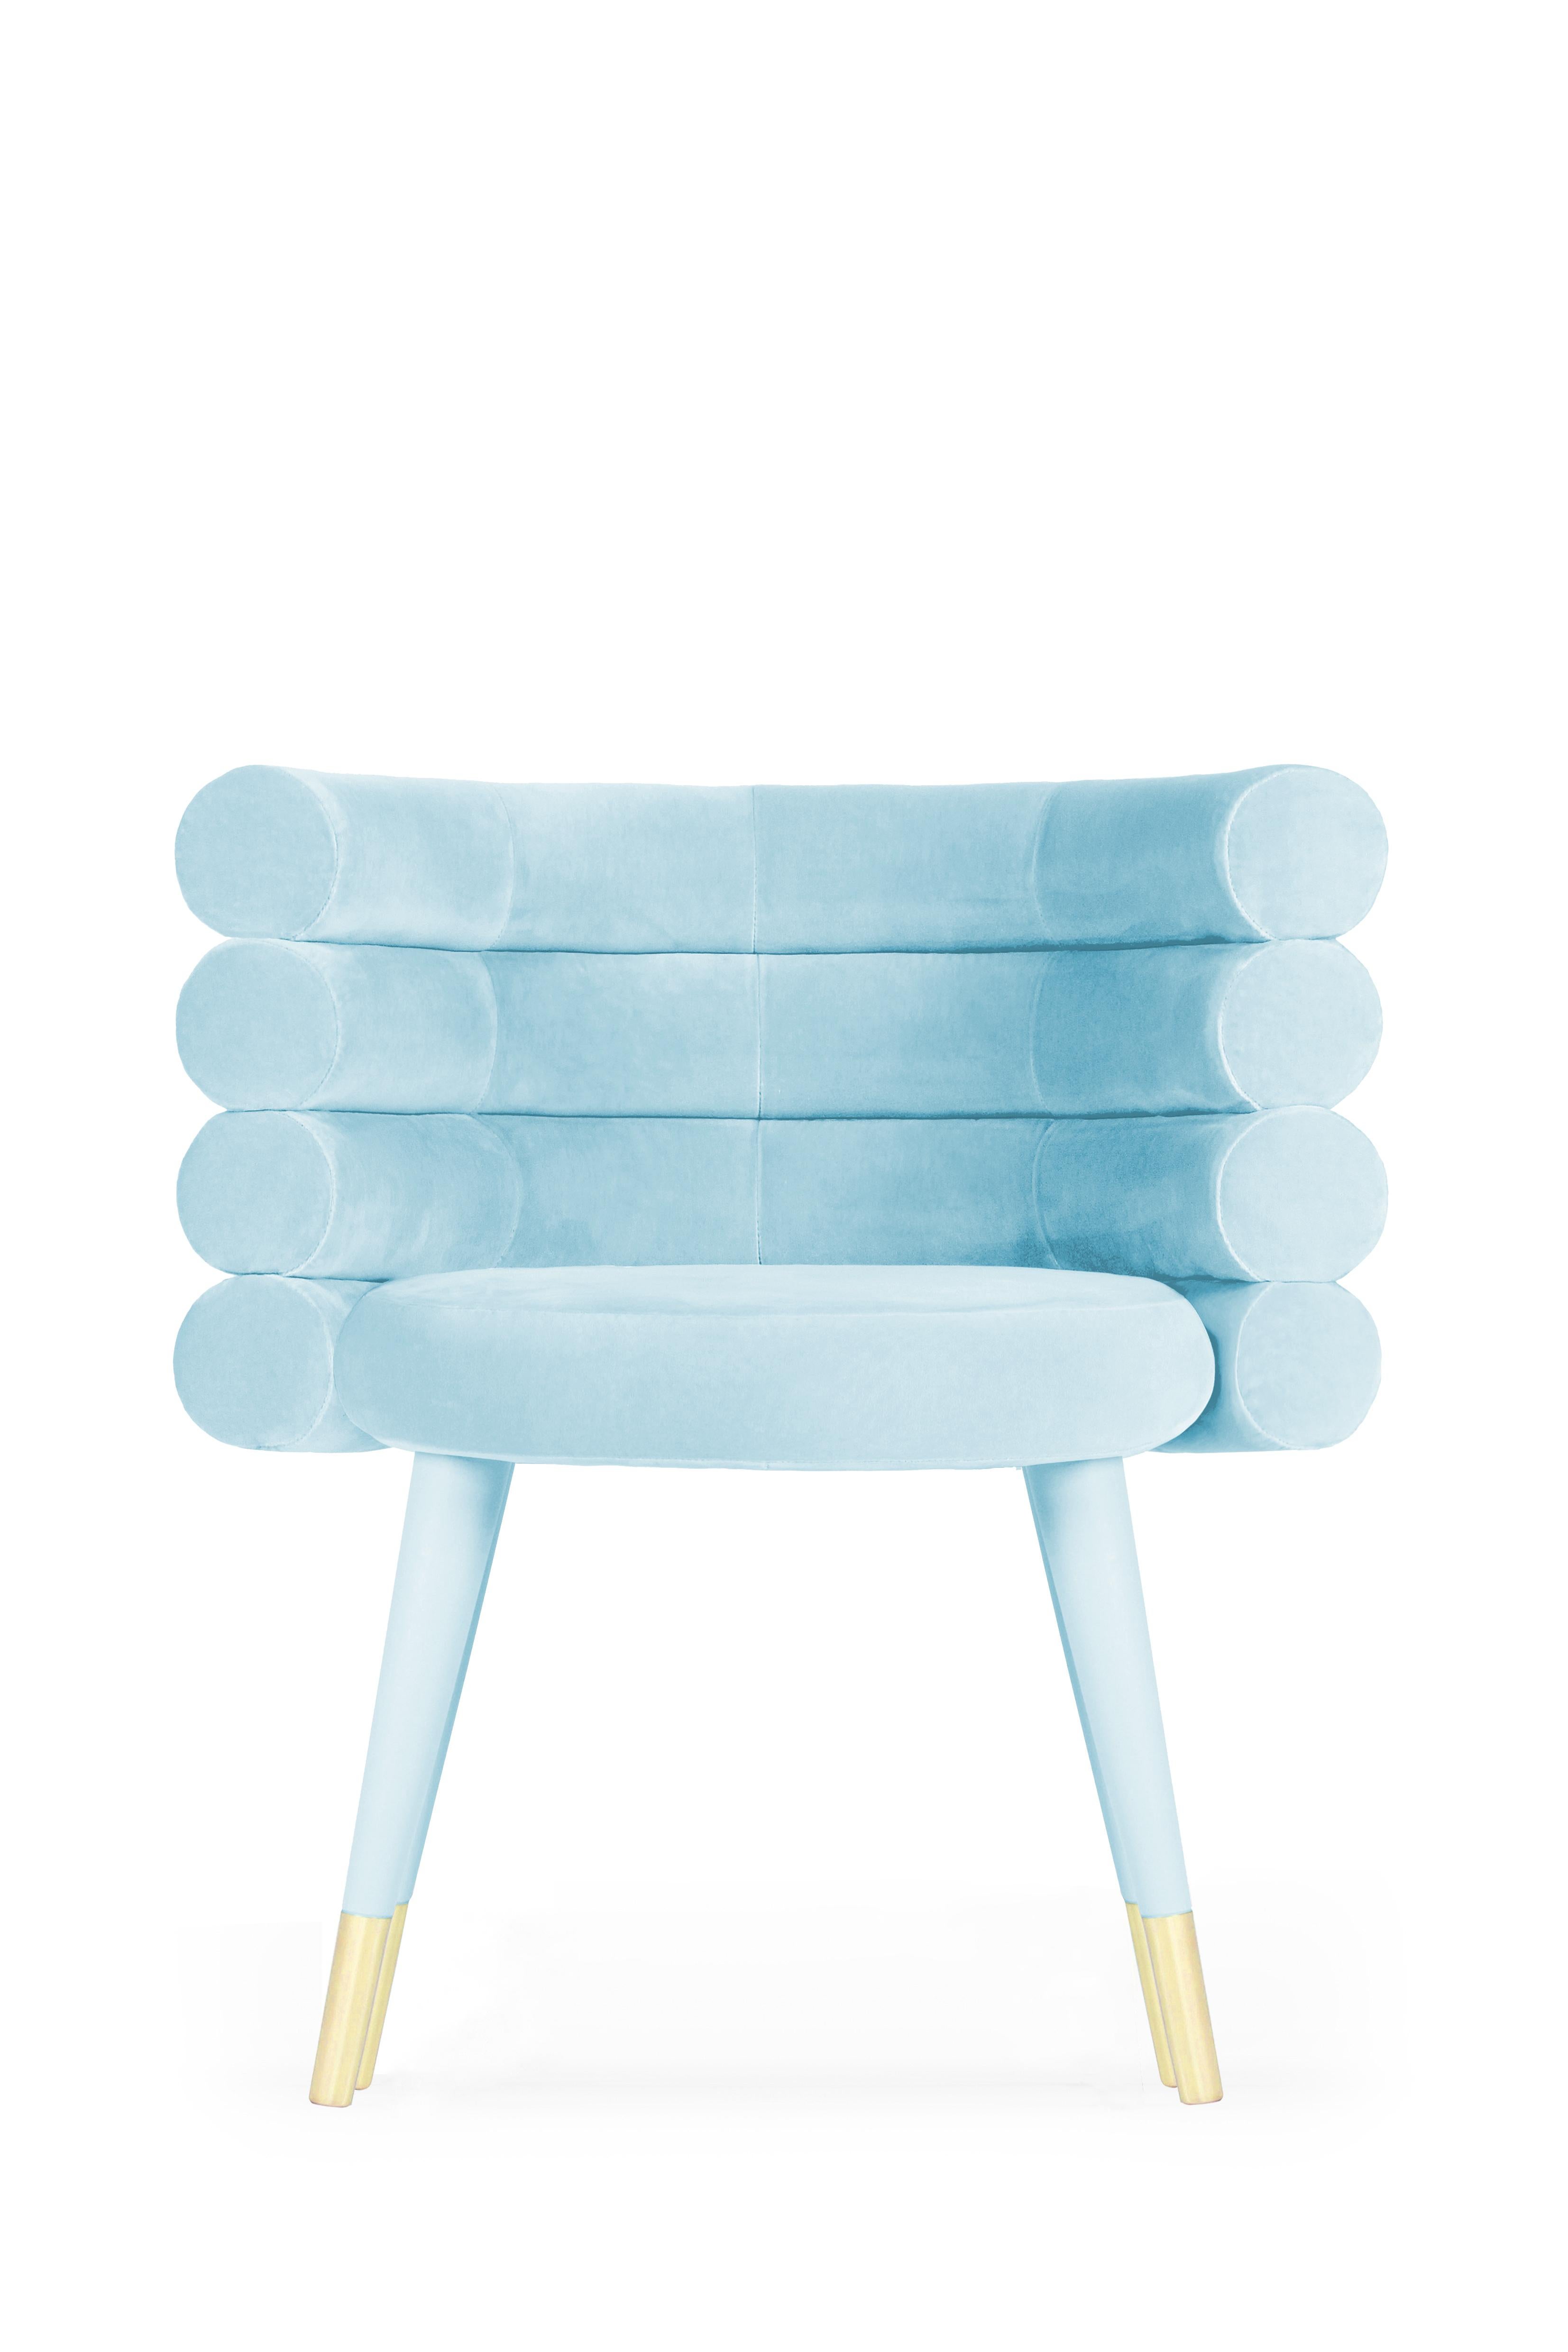 Modern Set of 4 Orange Marshmallow Dining Chairs, Royal Stranger For Sale